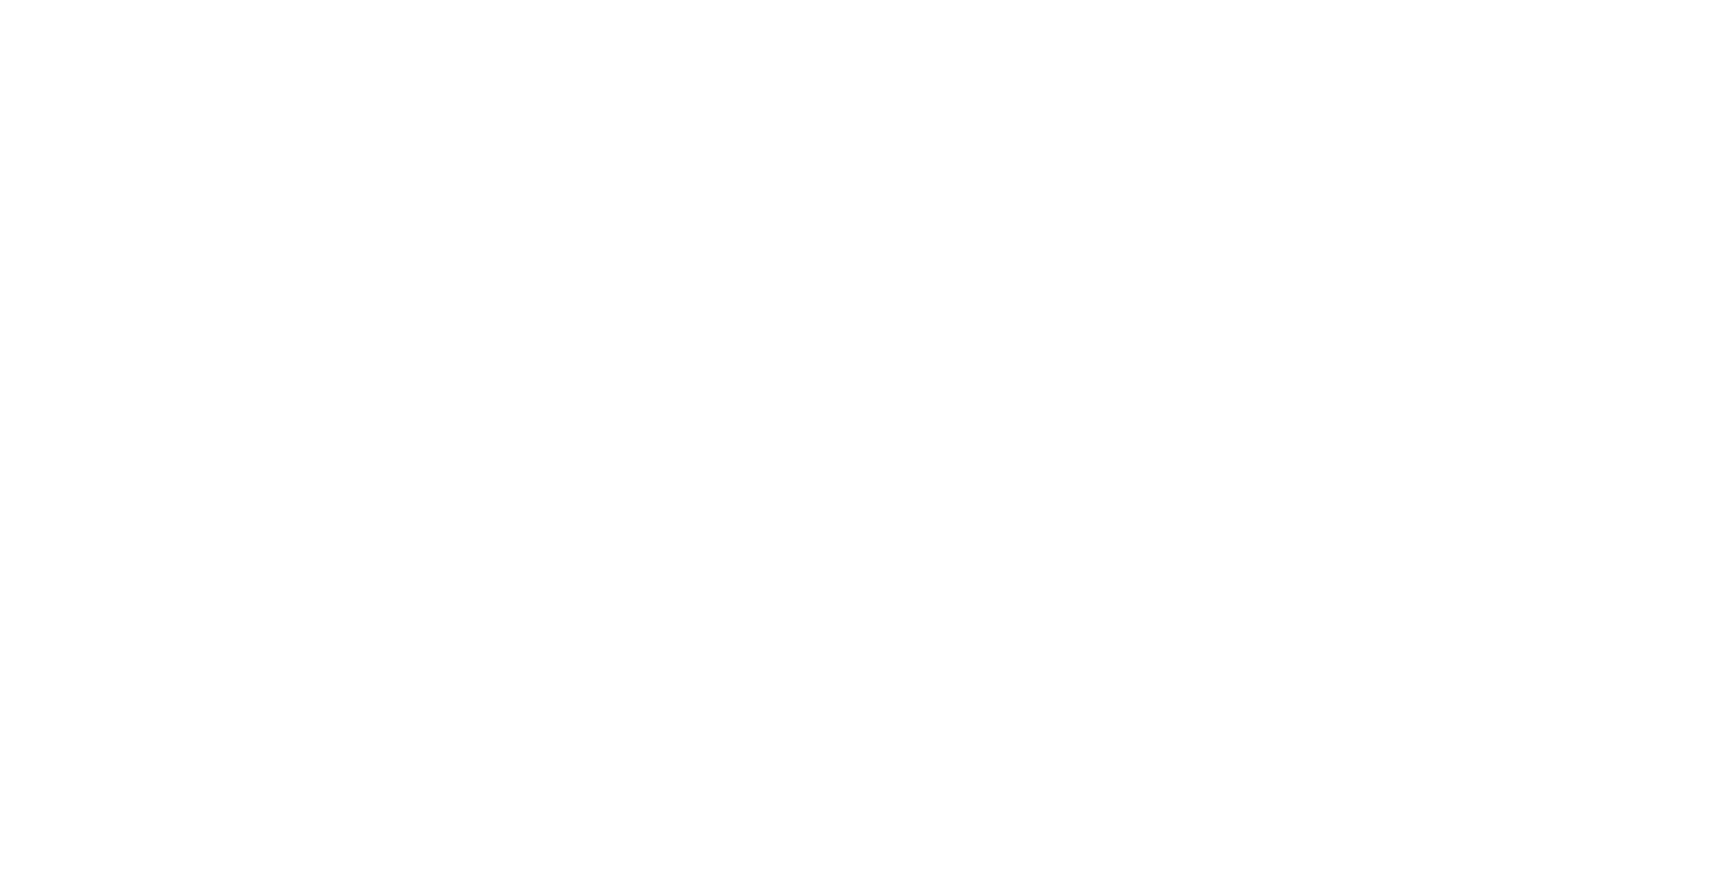 Northeastnorthcumbria NHS White